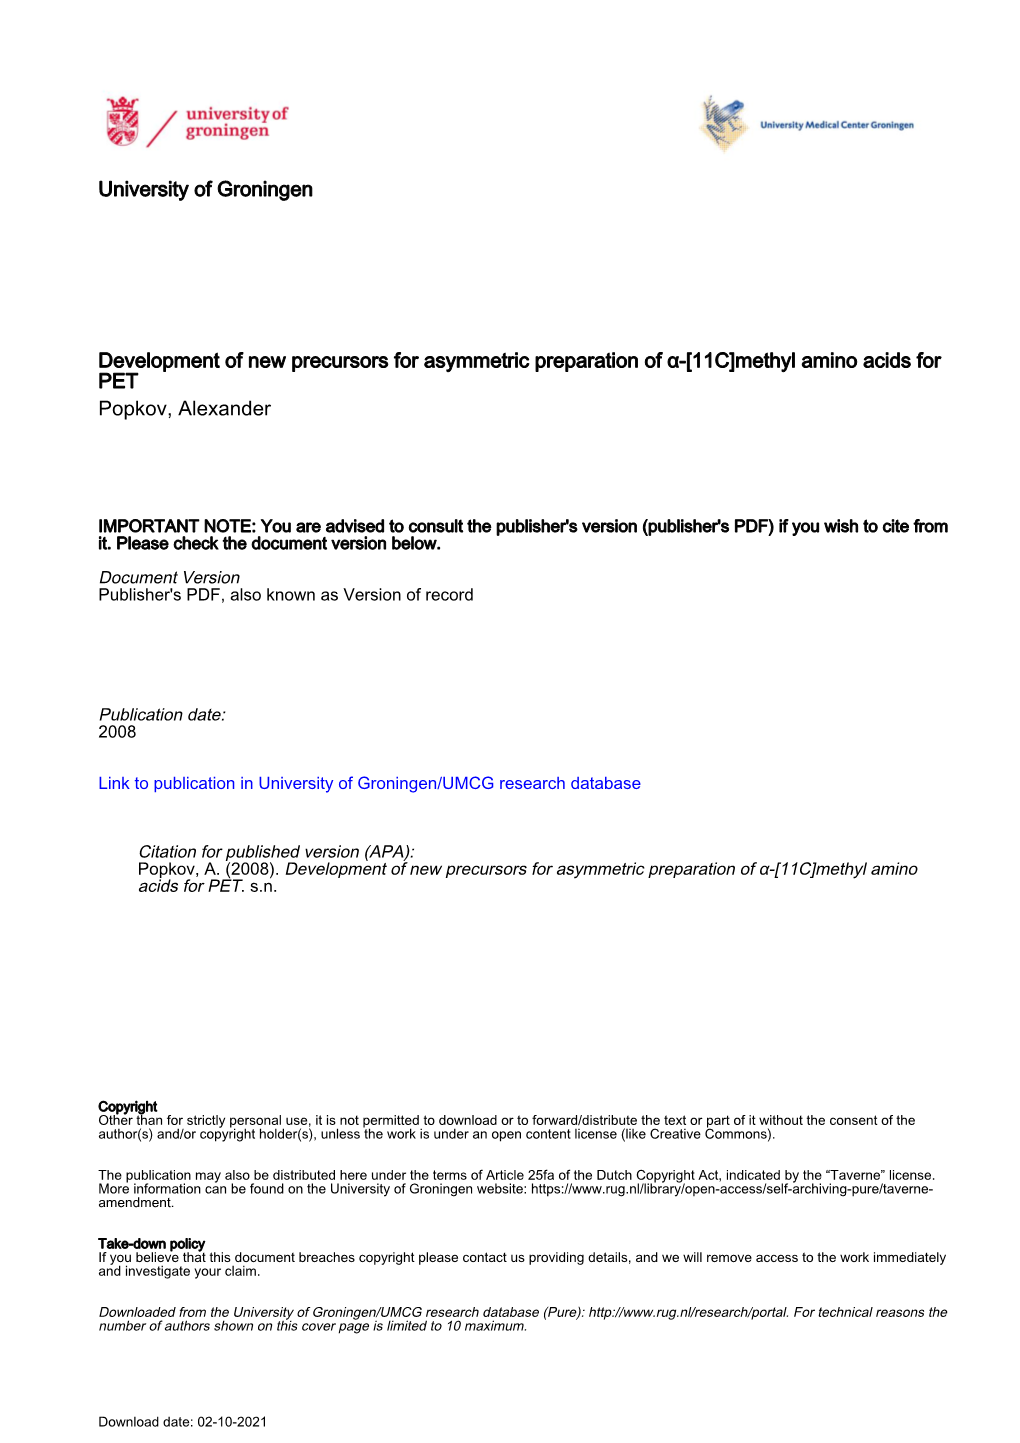 University of Groningen Development of New Precursors for Asymmetric Preparation of Α-[11C]Methyl Amino Acids for PET Popkov, A